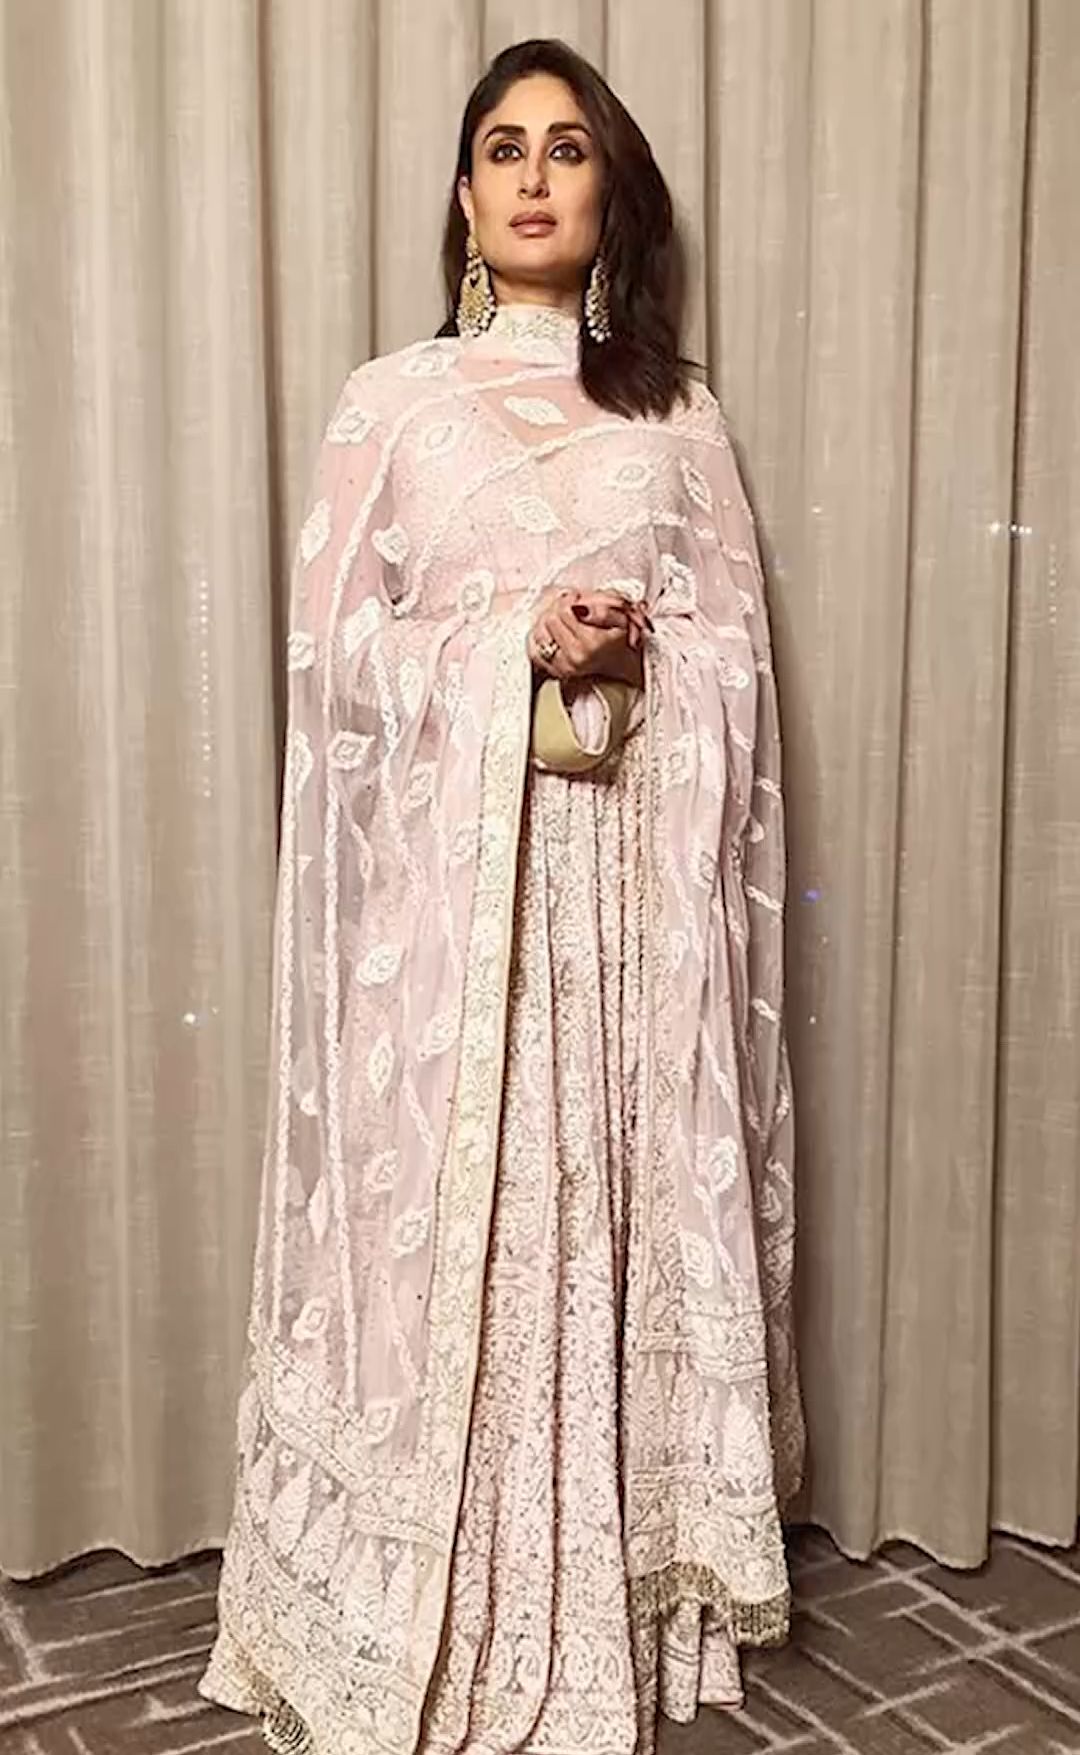 Kareena Kapoor Khan Wore Abu Jani Sandeep Khosla's 25-Year-Old Vintage  Lehenga In 'Veere Di